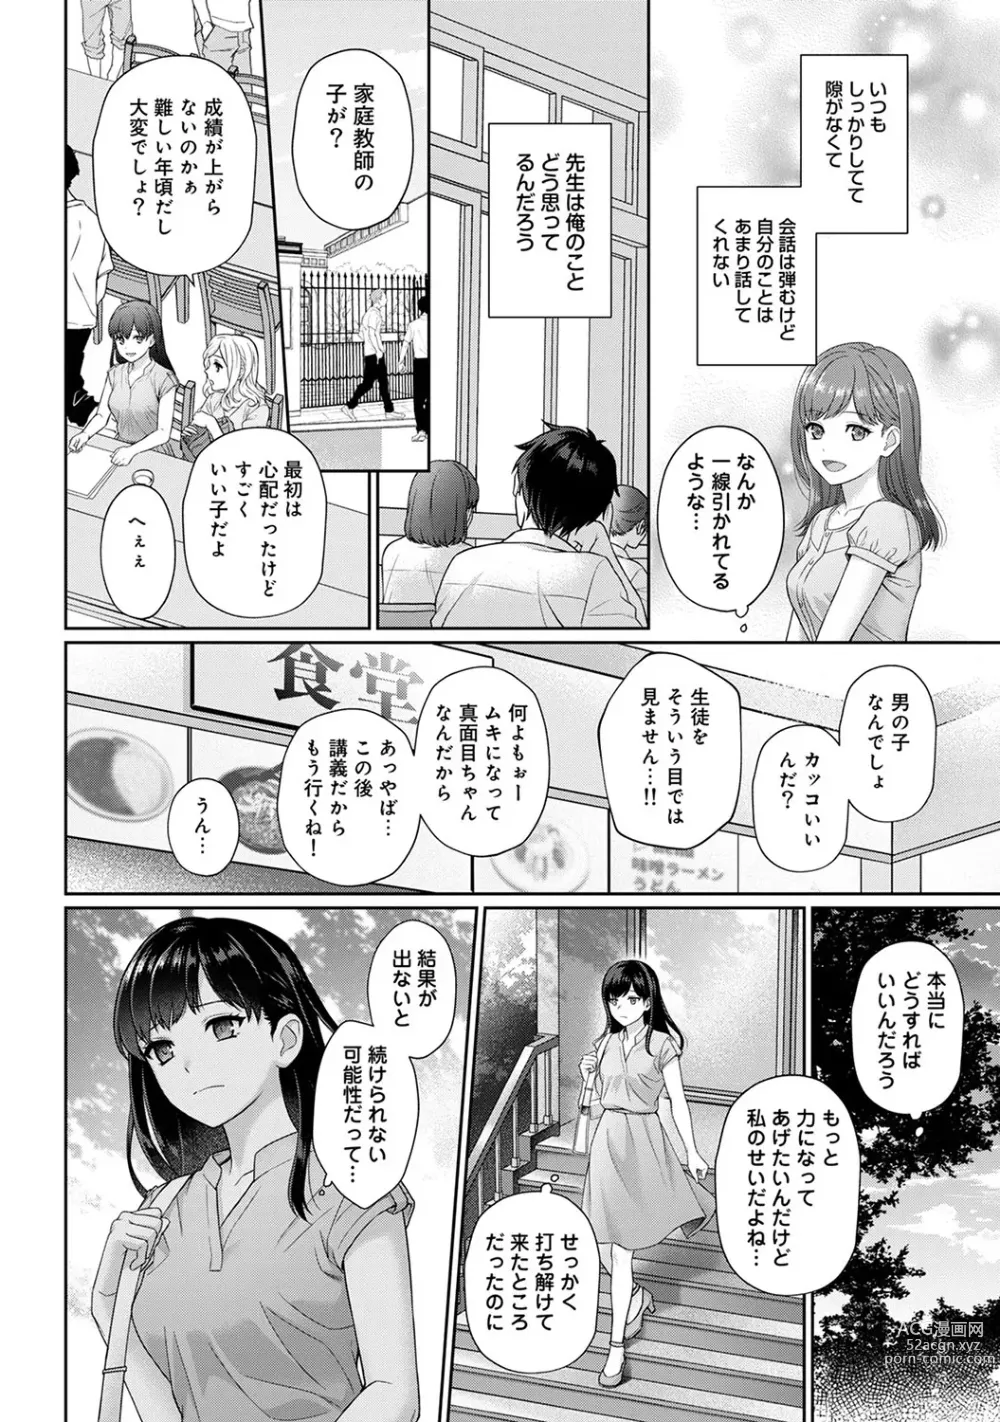 Page 9 of manga Sensei to Boku Ch. 1-14